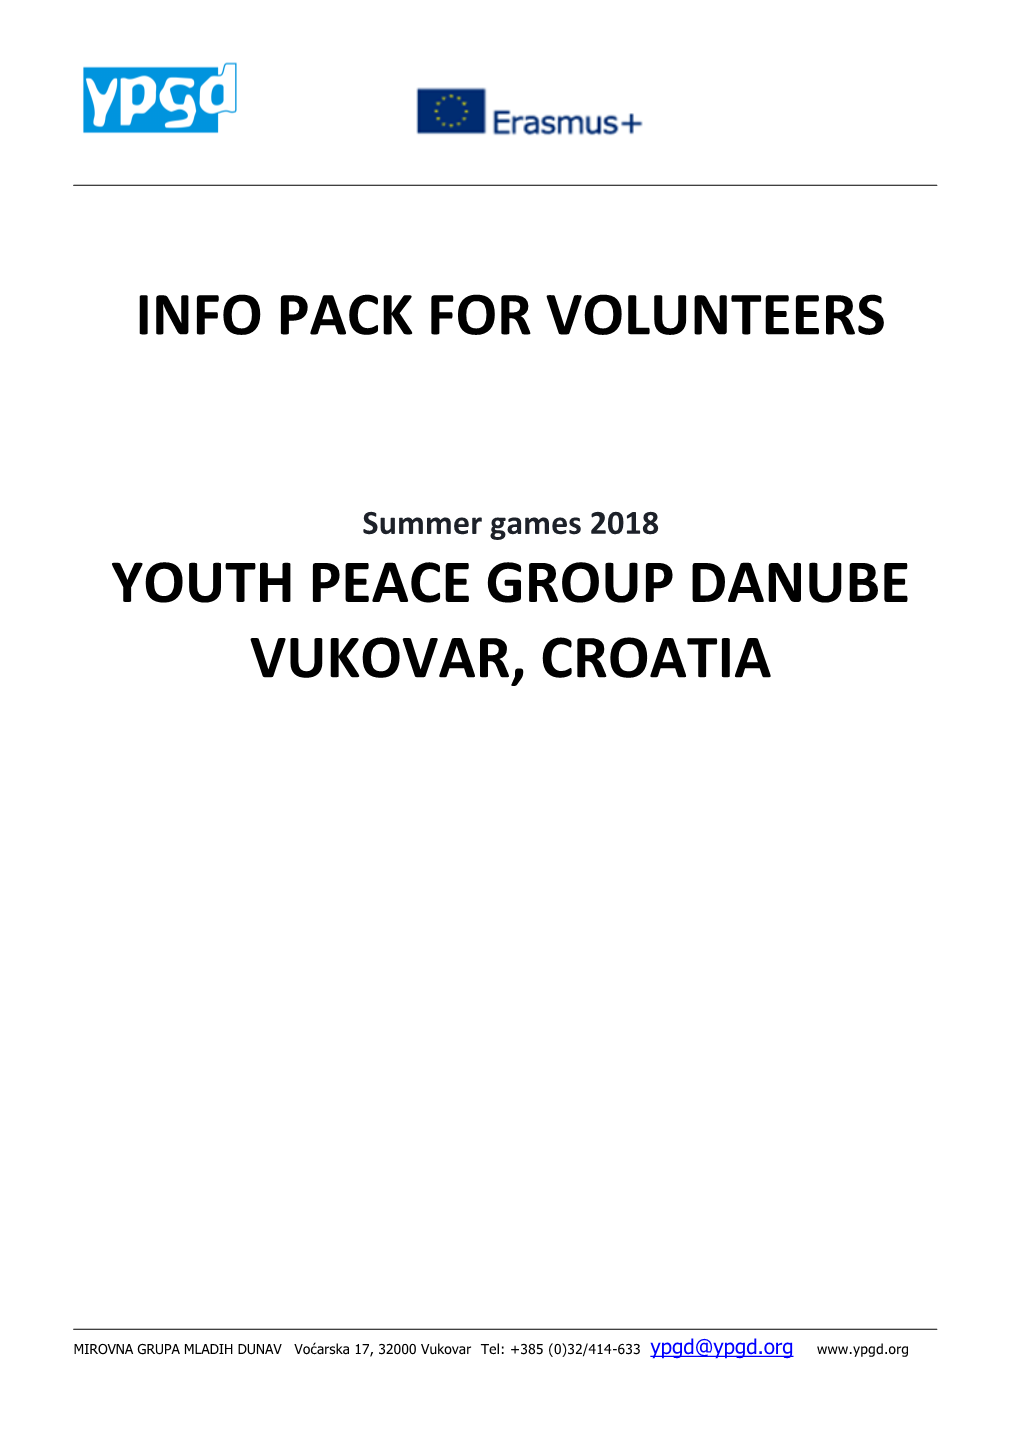 Udruga Mirovna Grupa Mladih Dunav, Voćarska 17, Vukovar Na Redovitoj